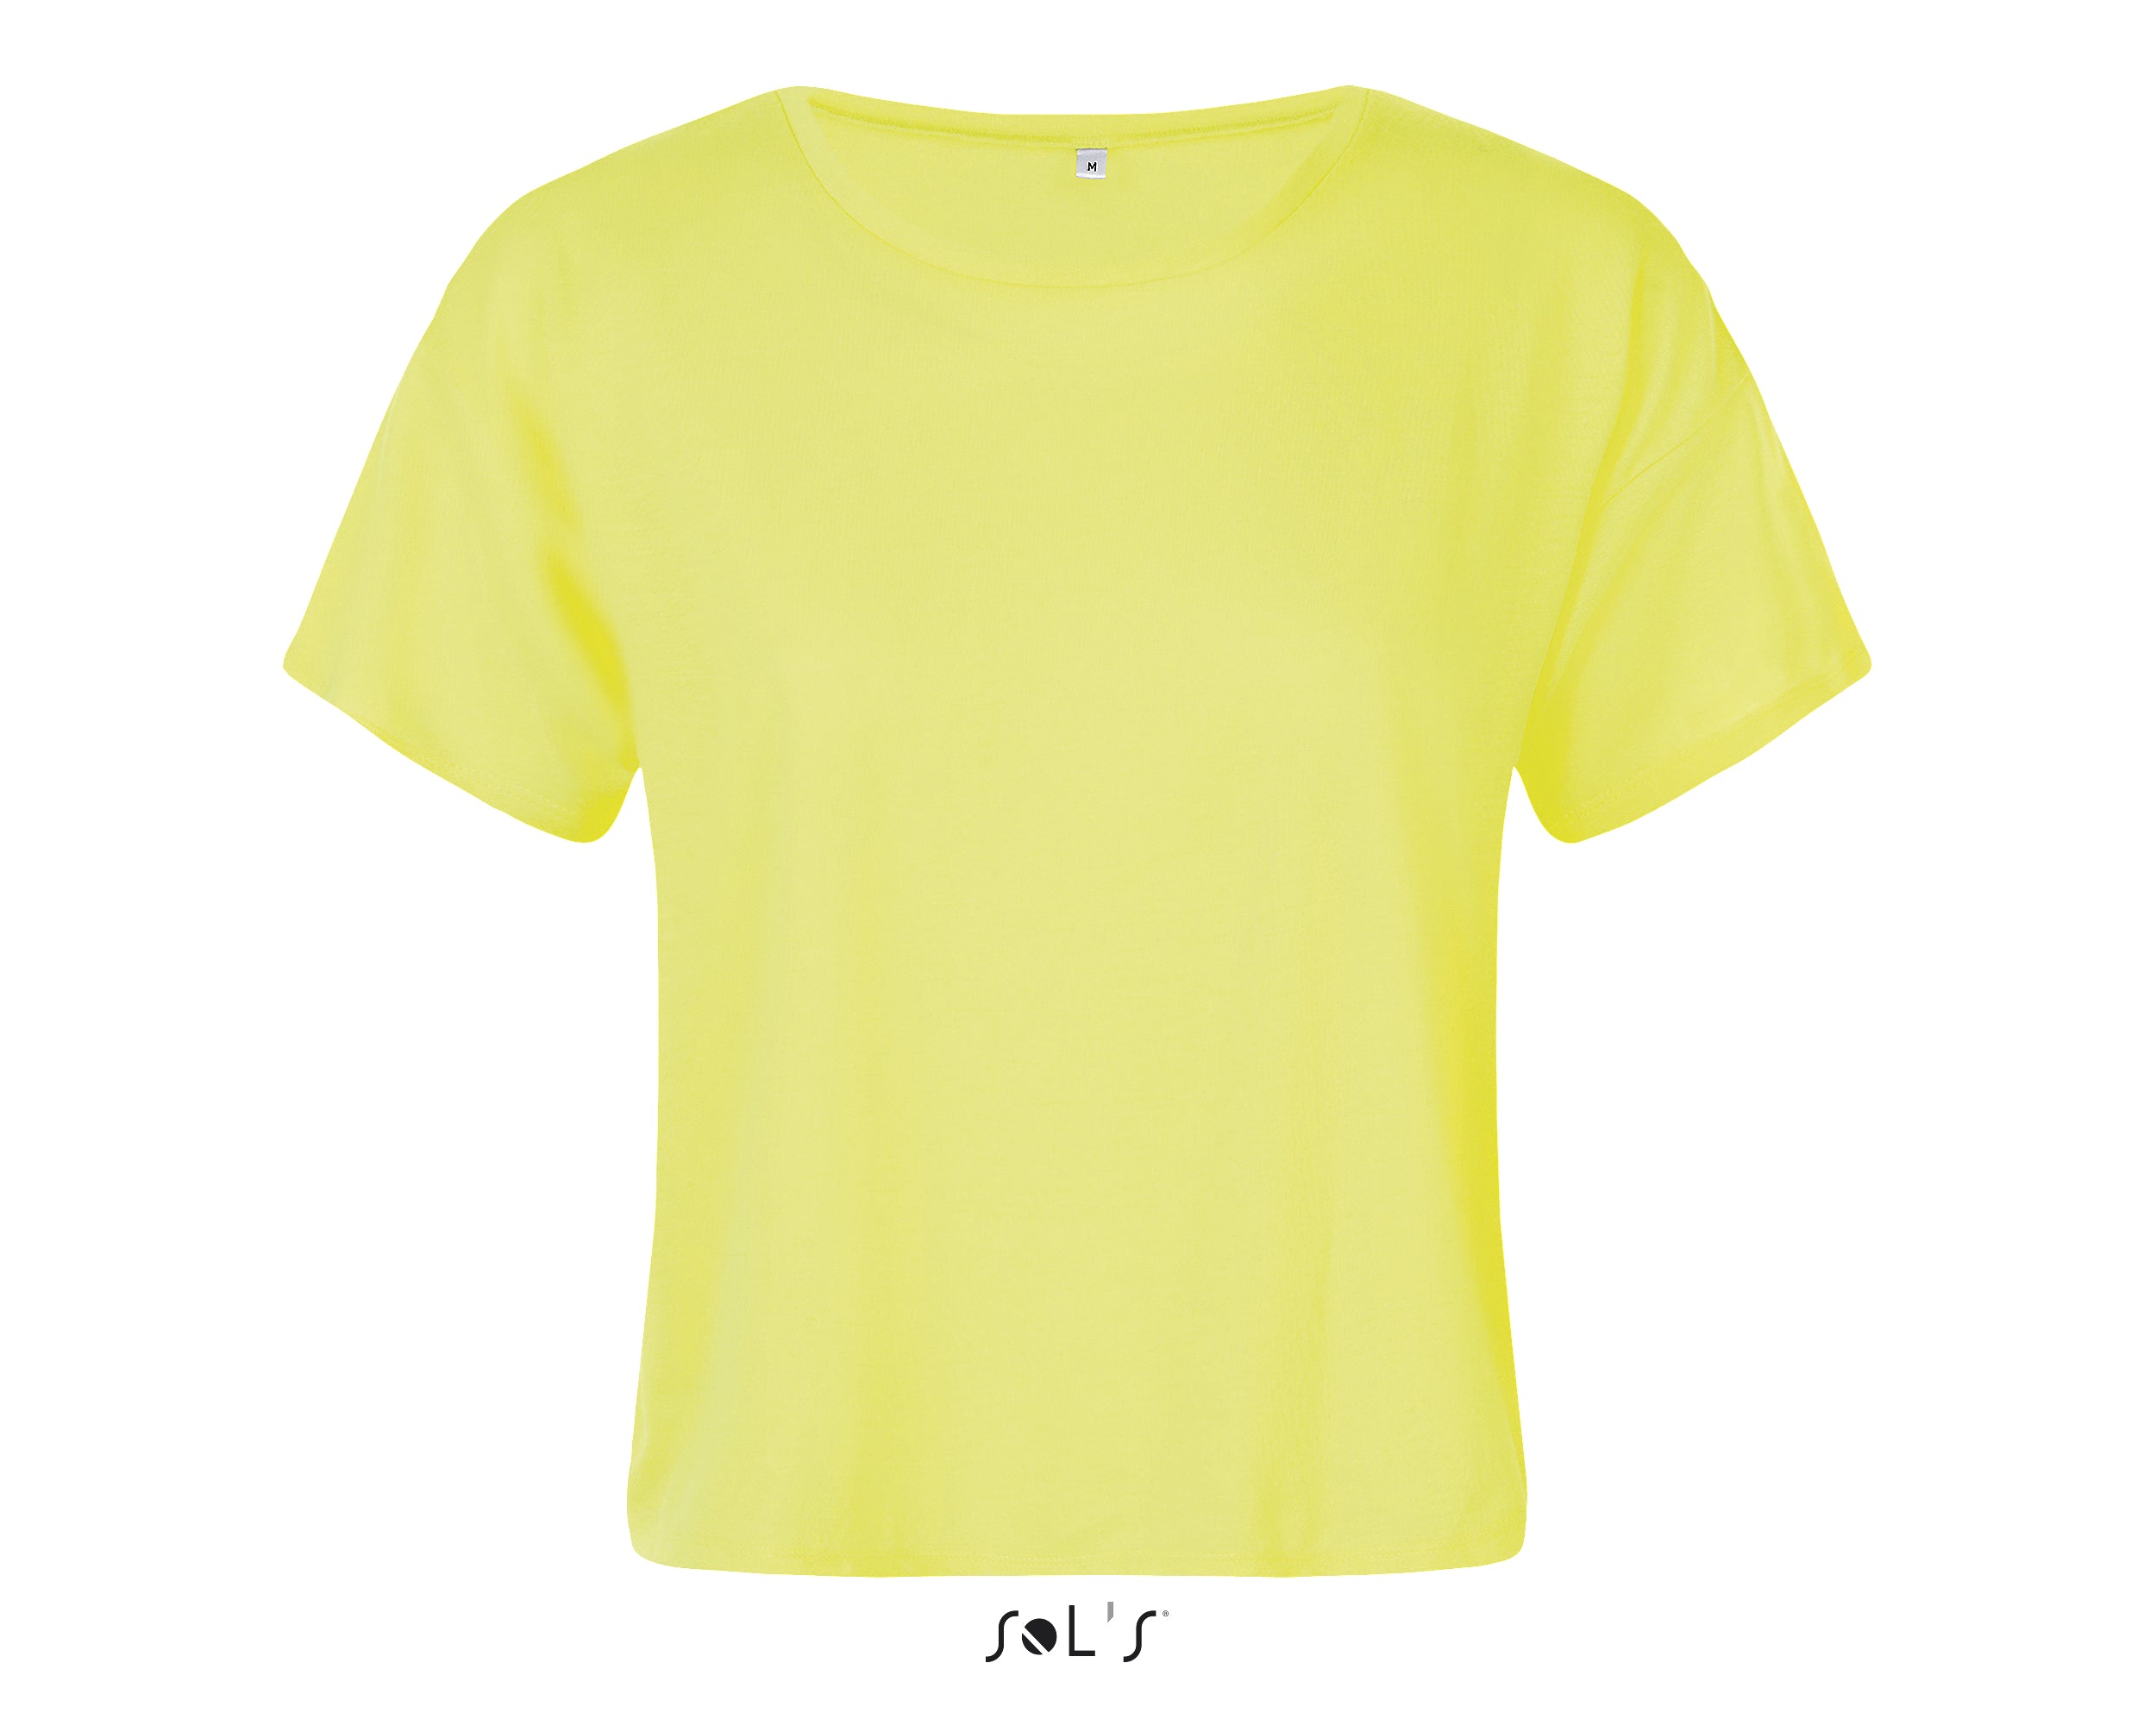 T-Shirt Crop Top Maeva - Femme